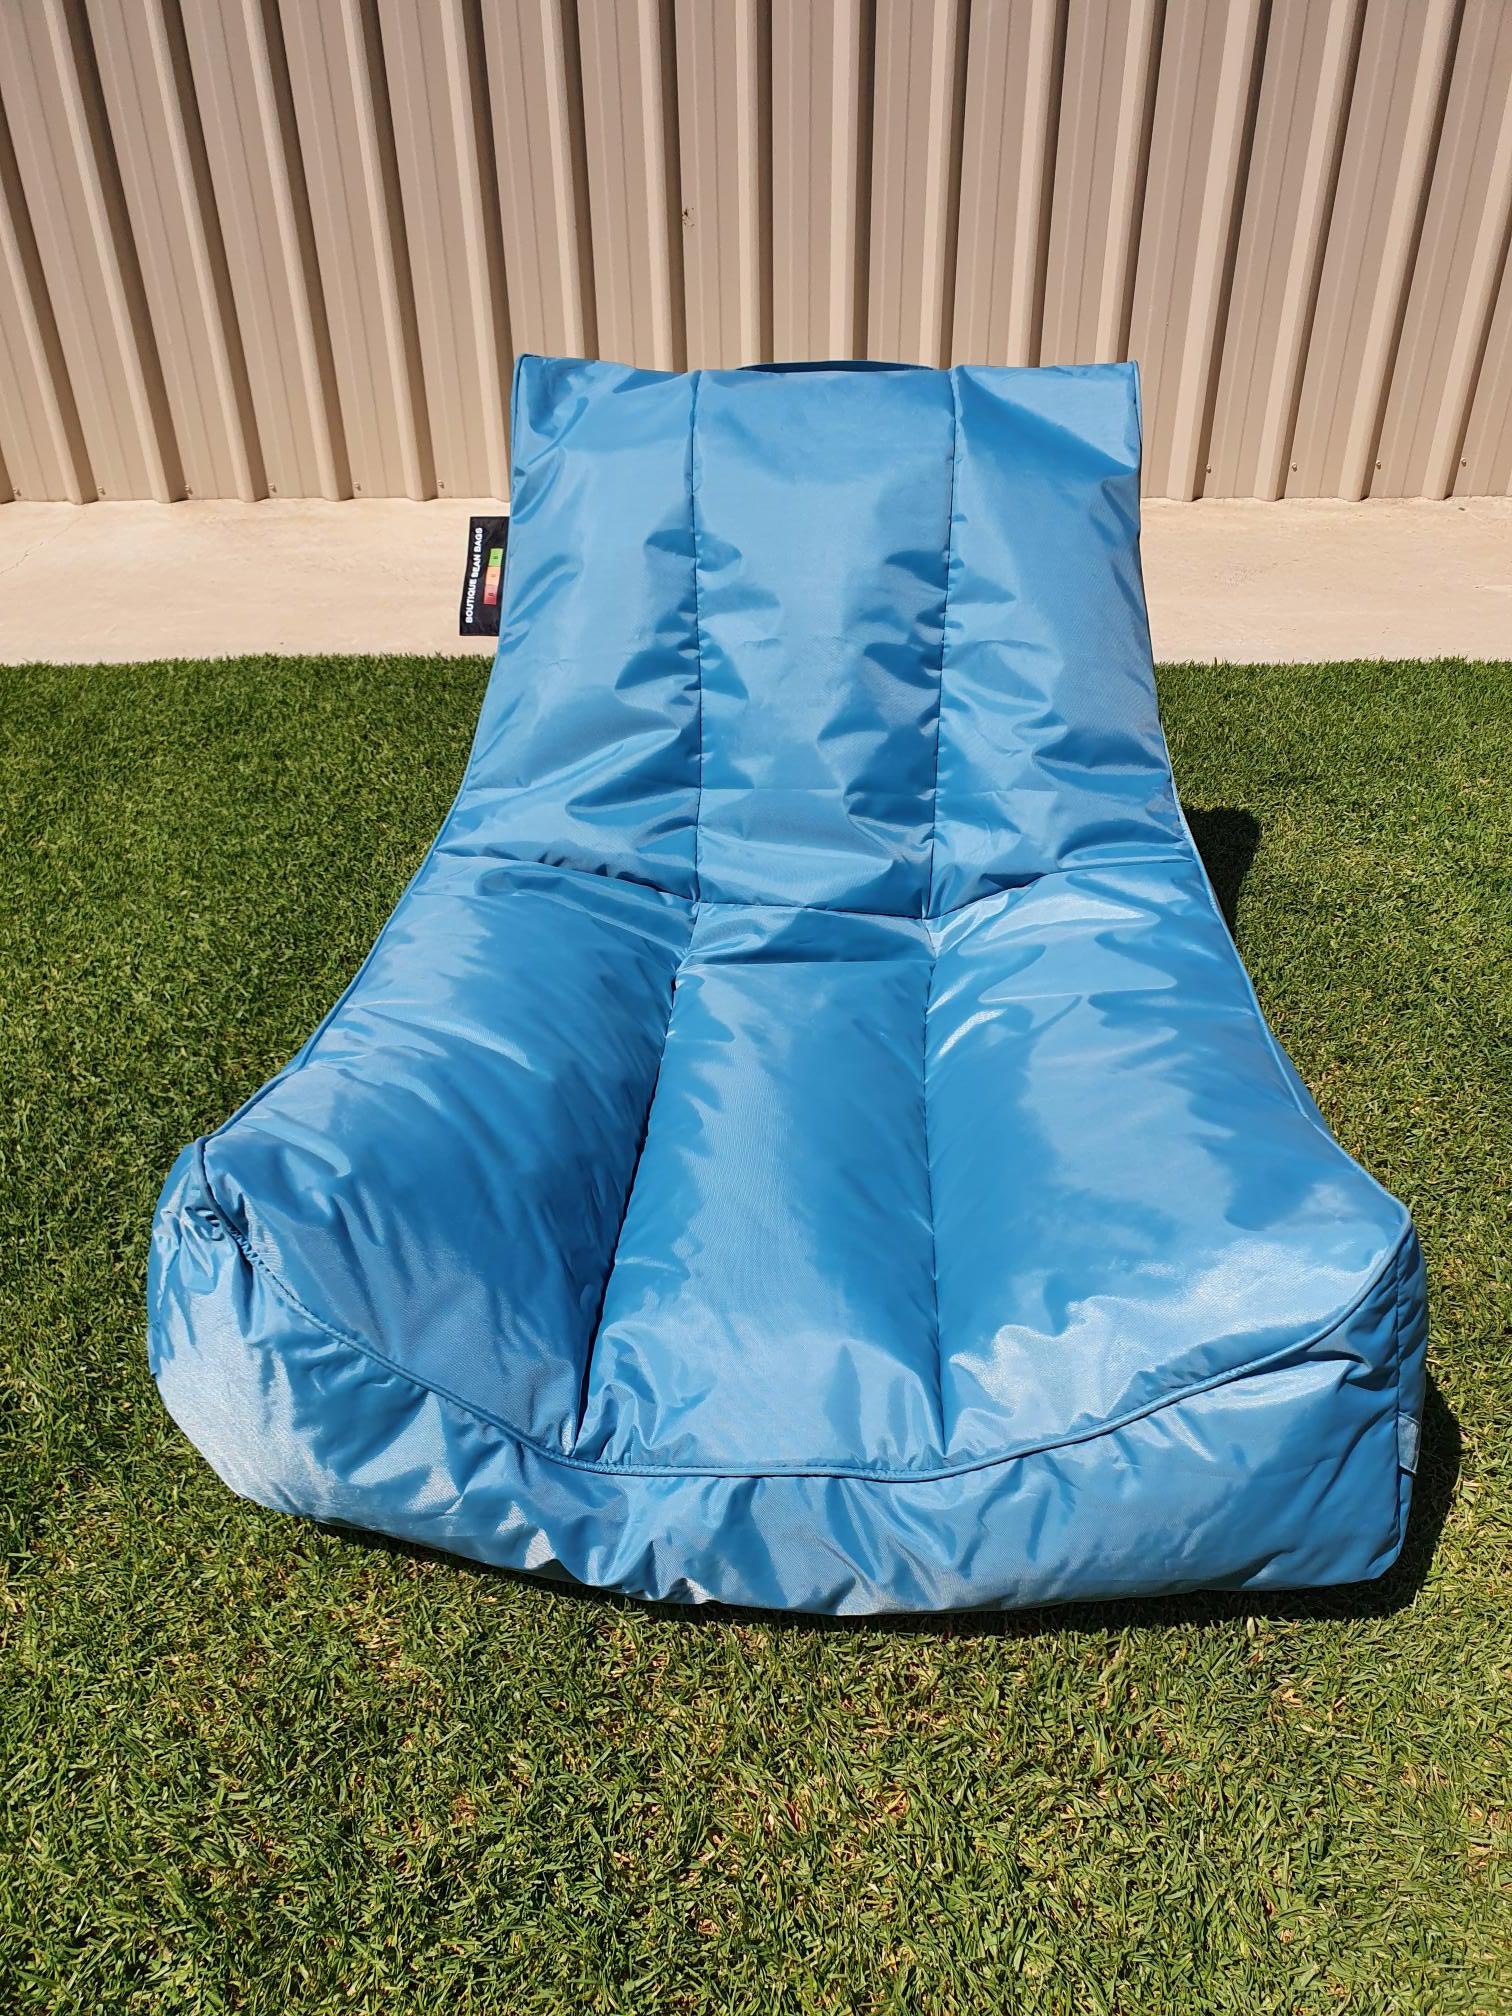 Water Chair floating pool bean bag aqua blue